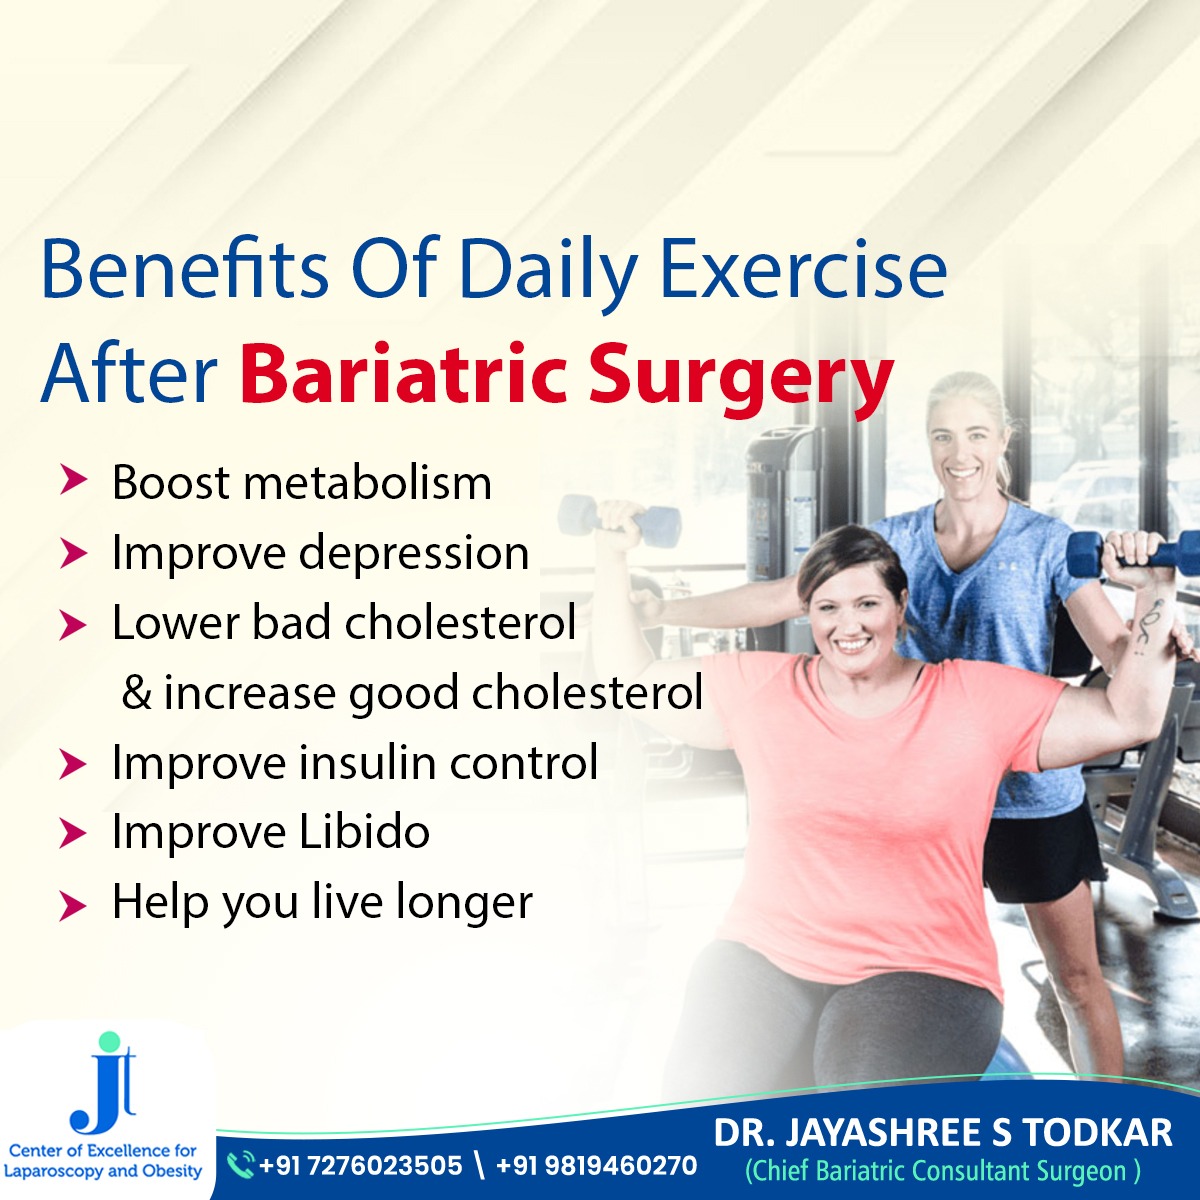 Benefits Of Daily Exercise After Bariatric Surgery

#drjayashreetodkar #ExerciseAfterBariatricSurgery #MetabolismBoost #MentalWellness #CholesterolHealth #InsulinControl #LibidoImprovement #LongevityBenefits #PostSurgeryFitness #HealthyLifestyle #BariatricHealth #ExerciseBenefits